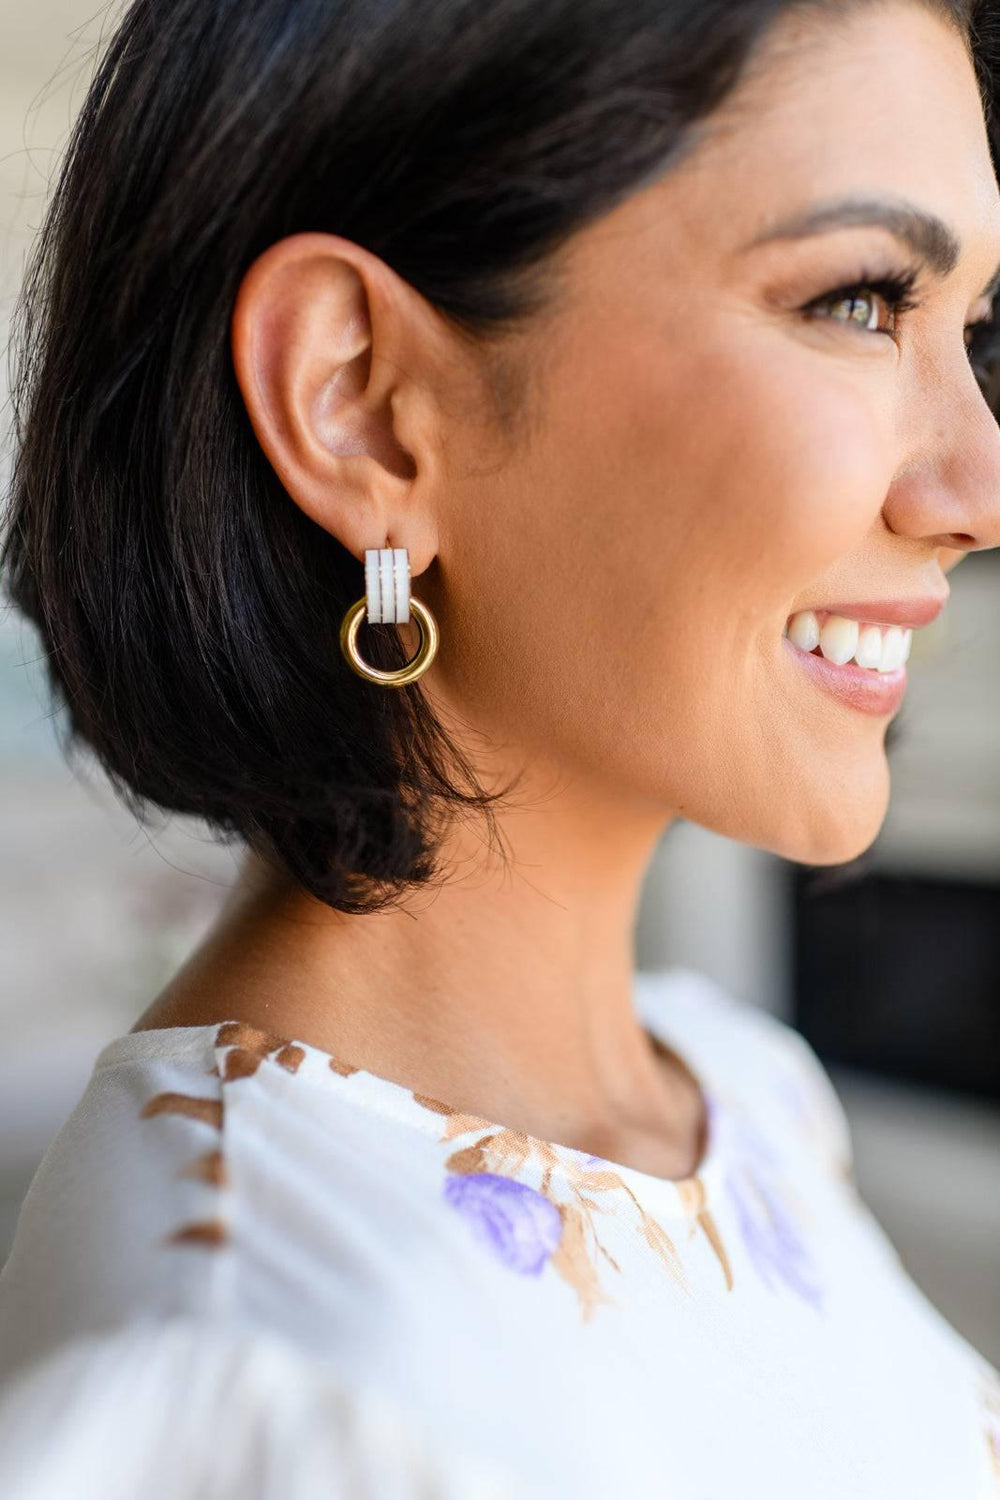 Perlescence ring stainless steel earrings OS Earrings